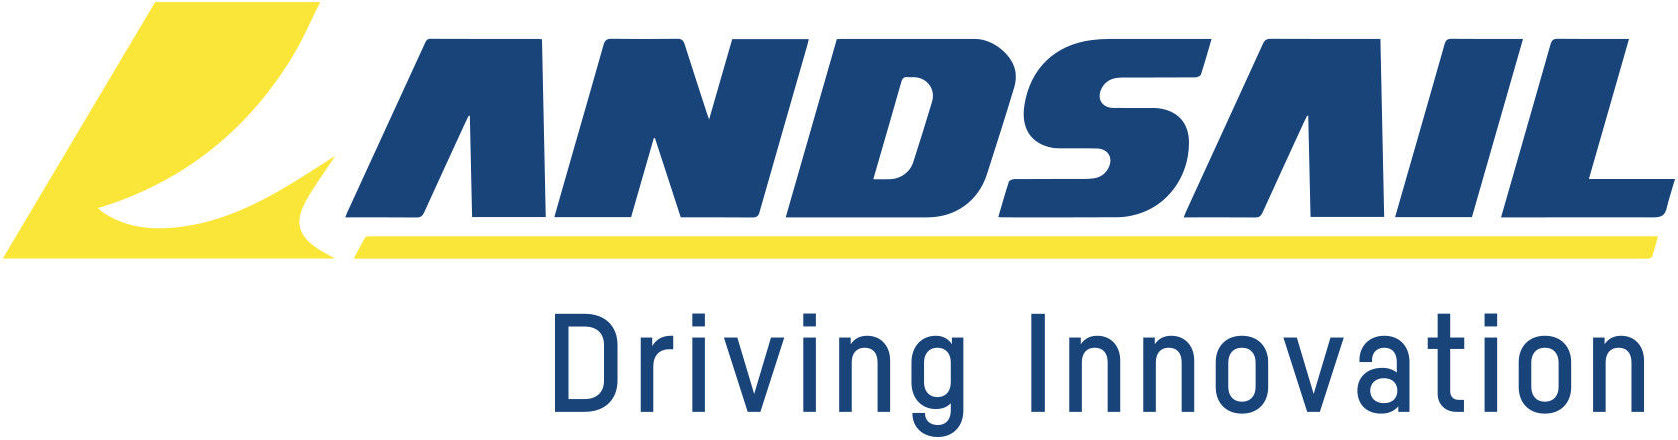 Логотип Landsail